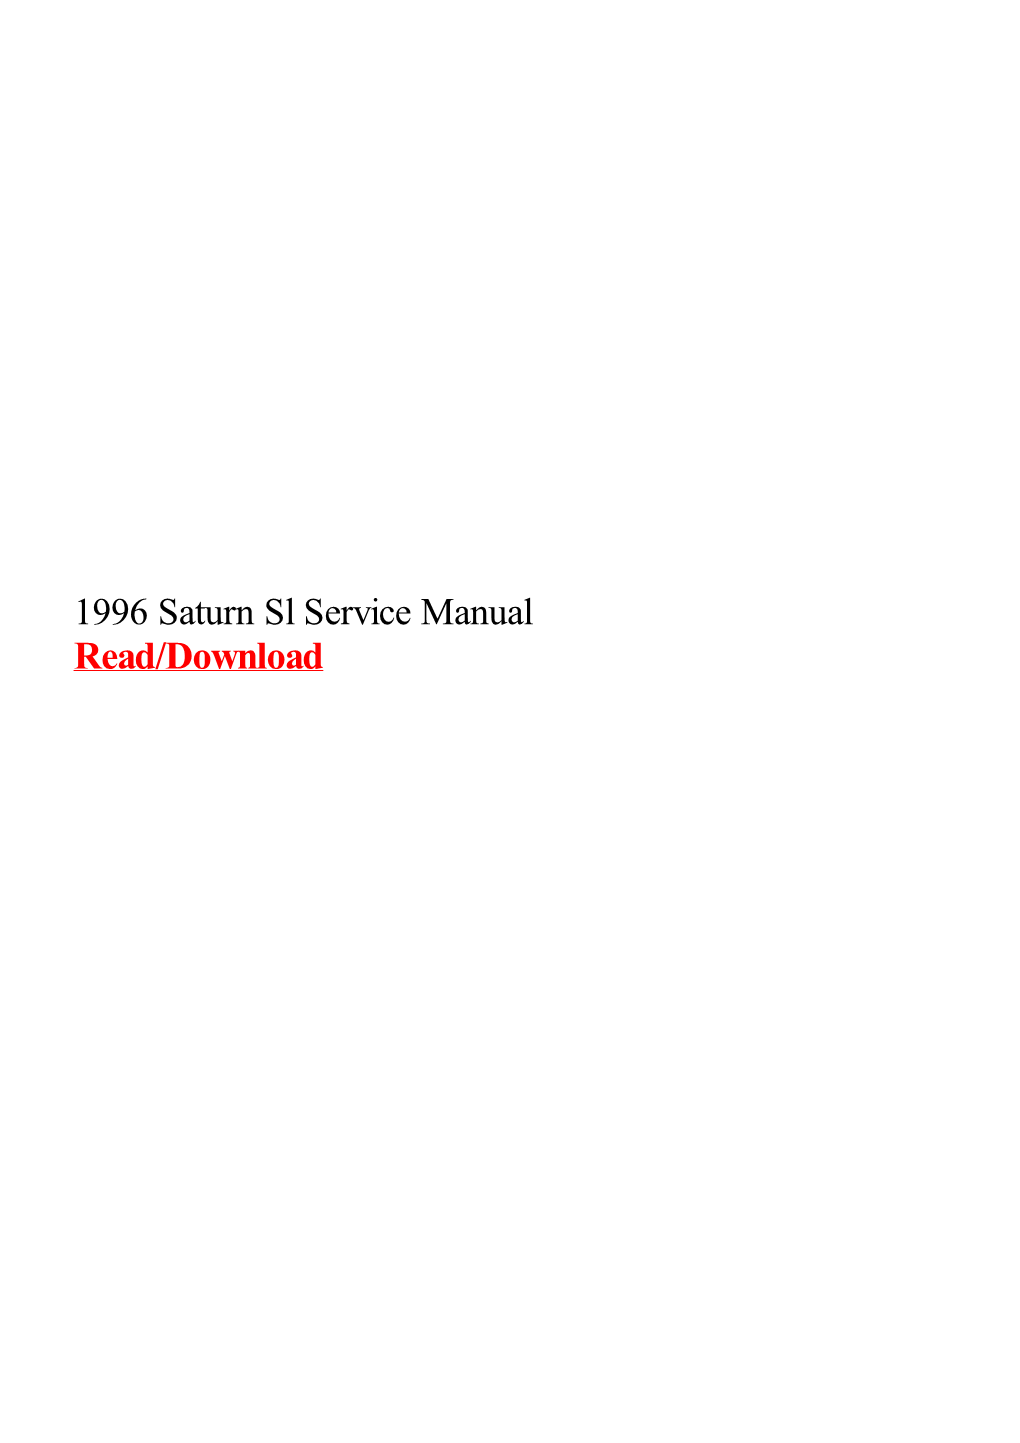 1996-Saturn-Sl-Service-Manual.Pdf